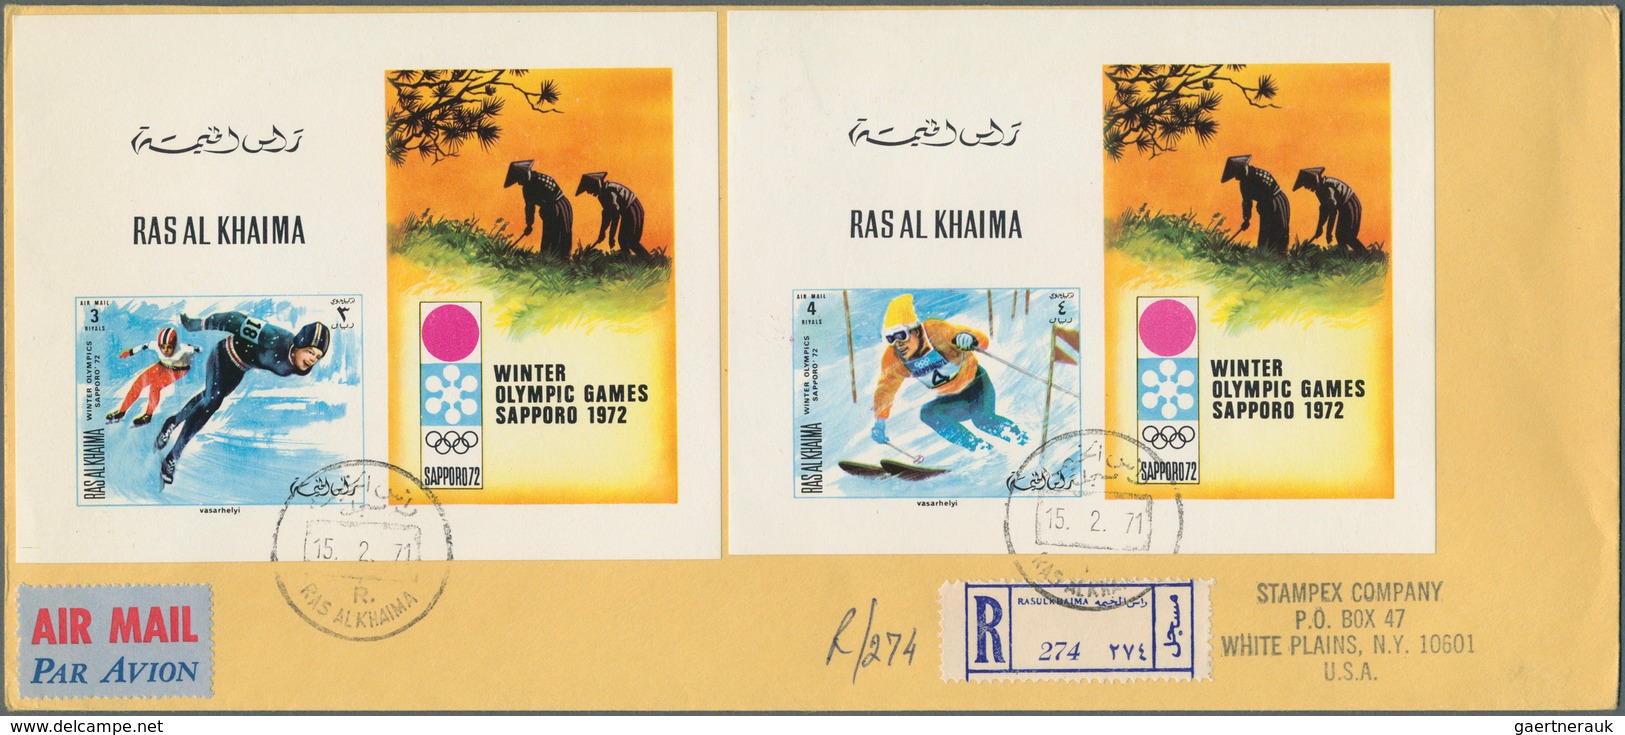 Ras al Khaima: 1970/1971, Football World Championship/Olympic Games, group of twelve registered airm